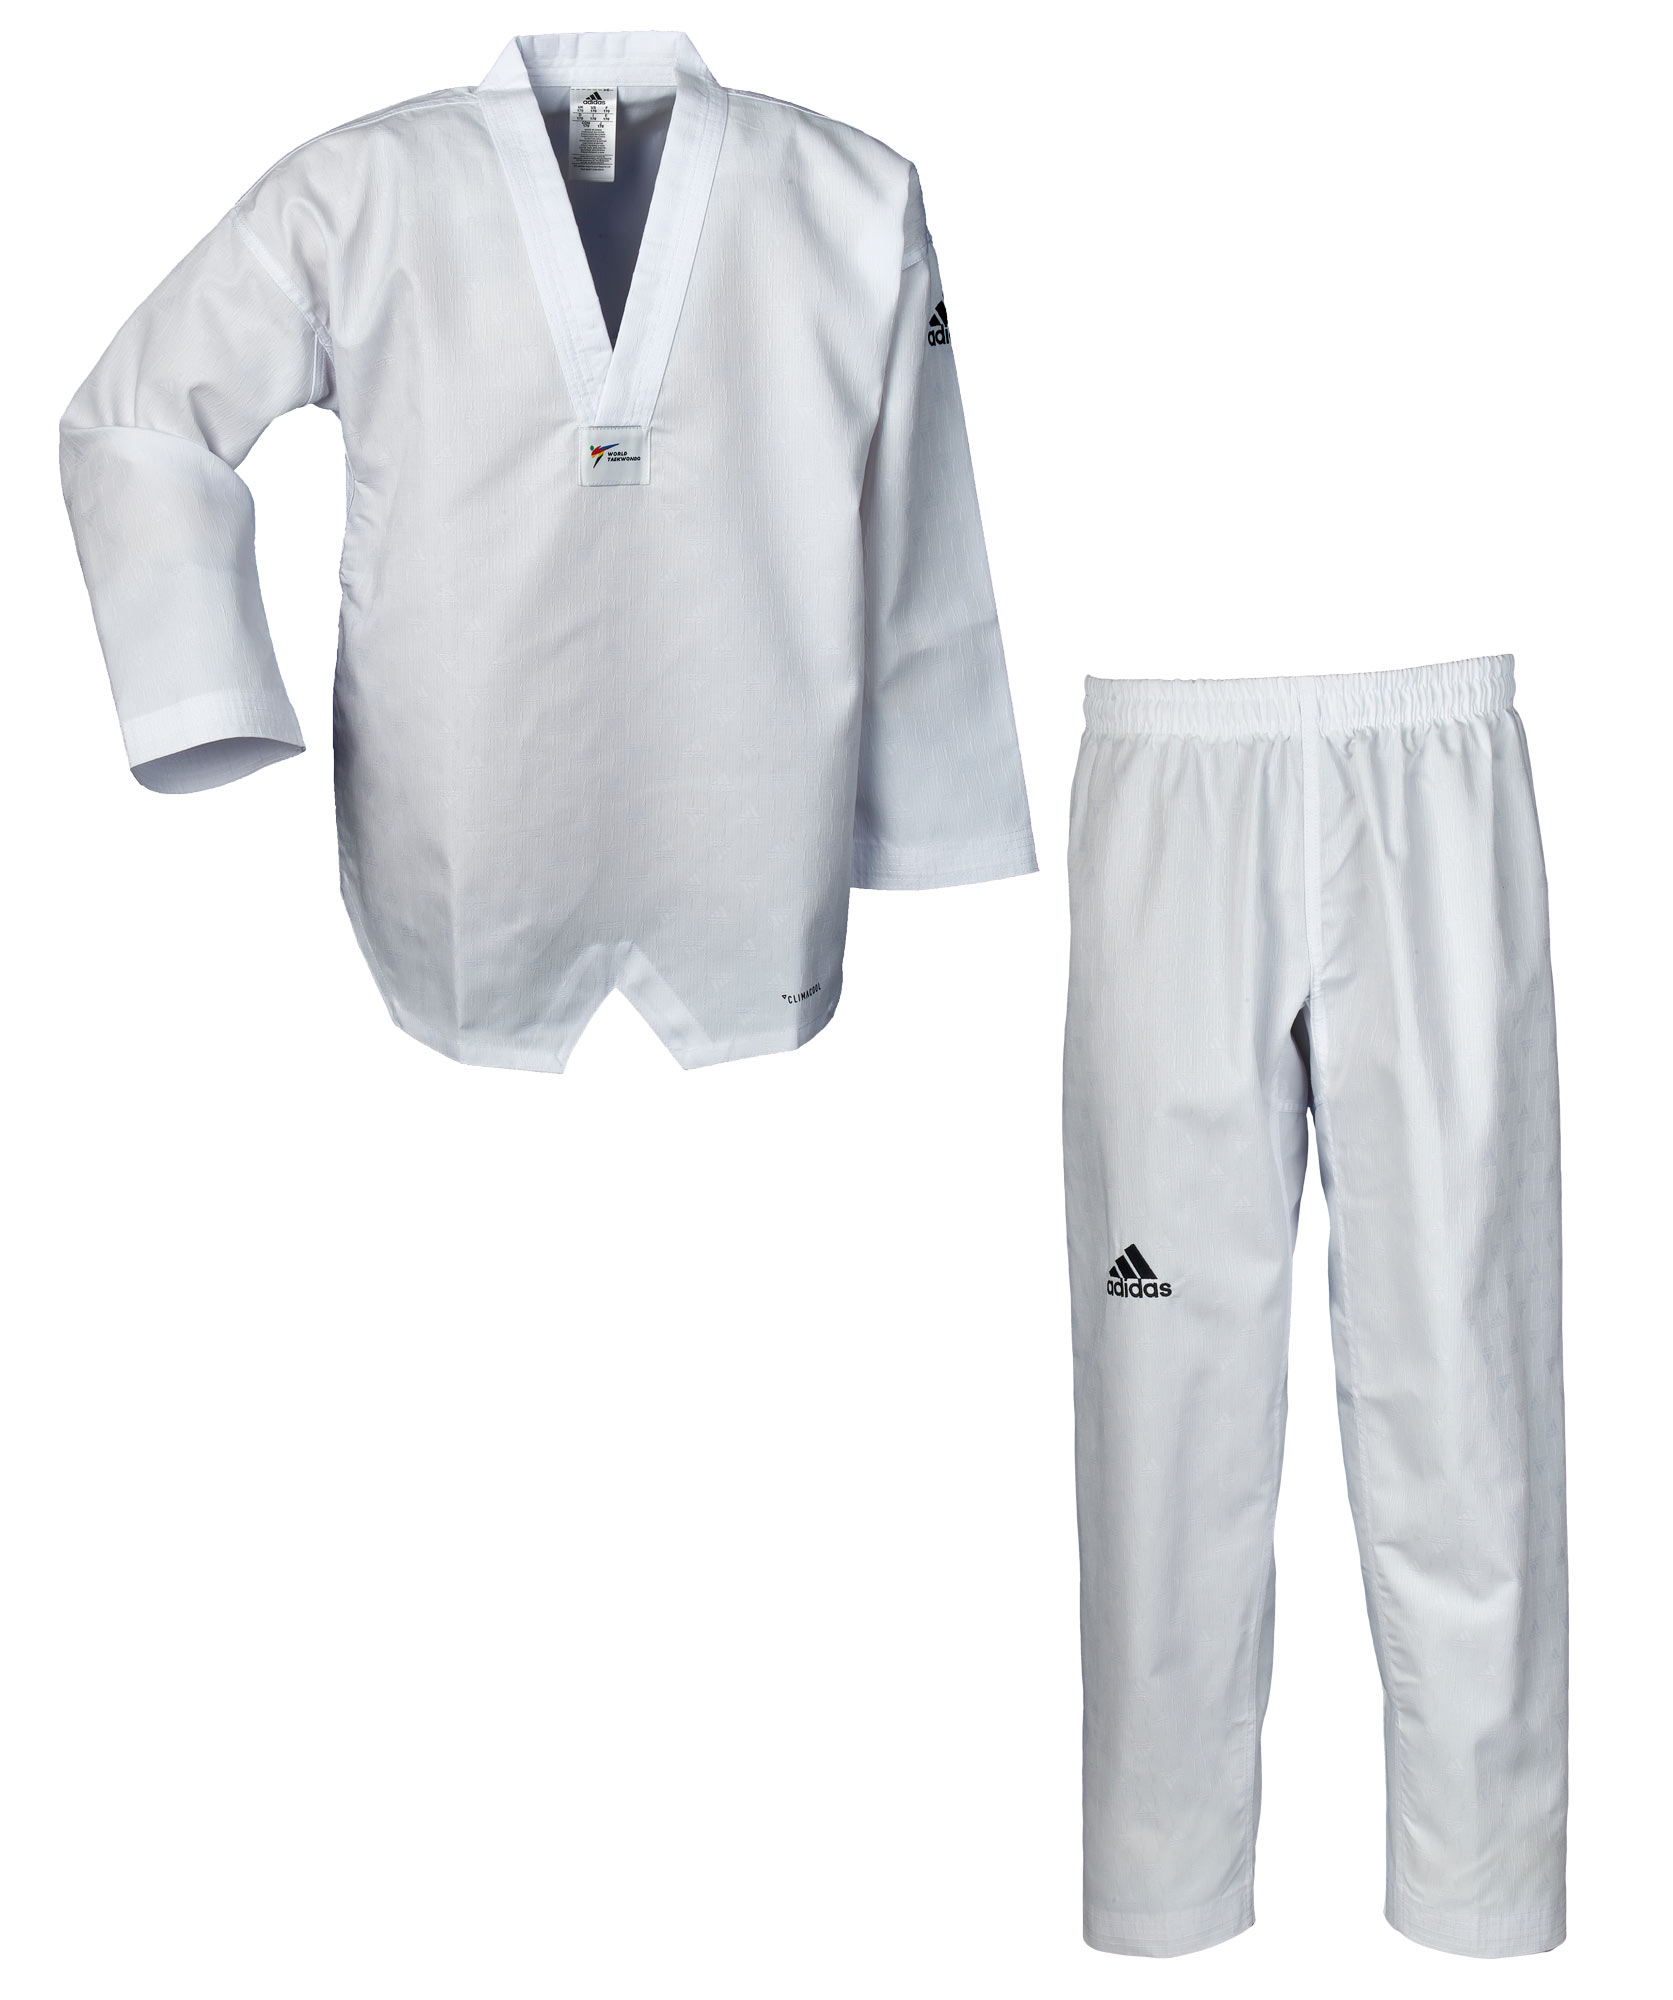 Adidas Taekwondo-Anzug adiChamp IV, weißes Revers